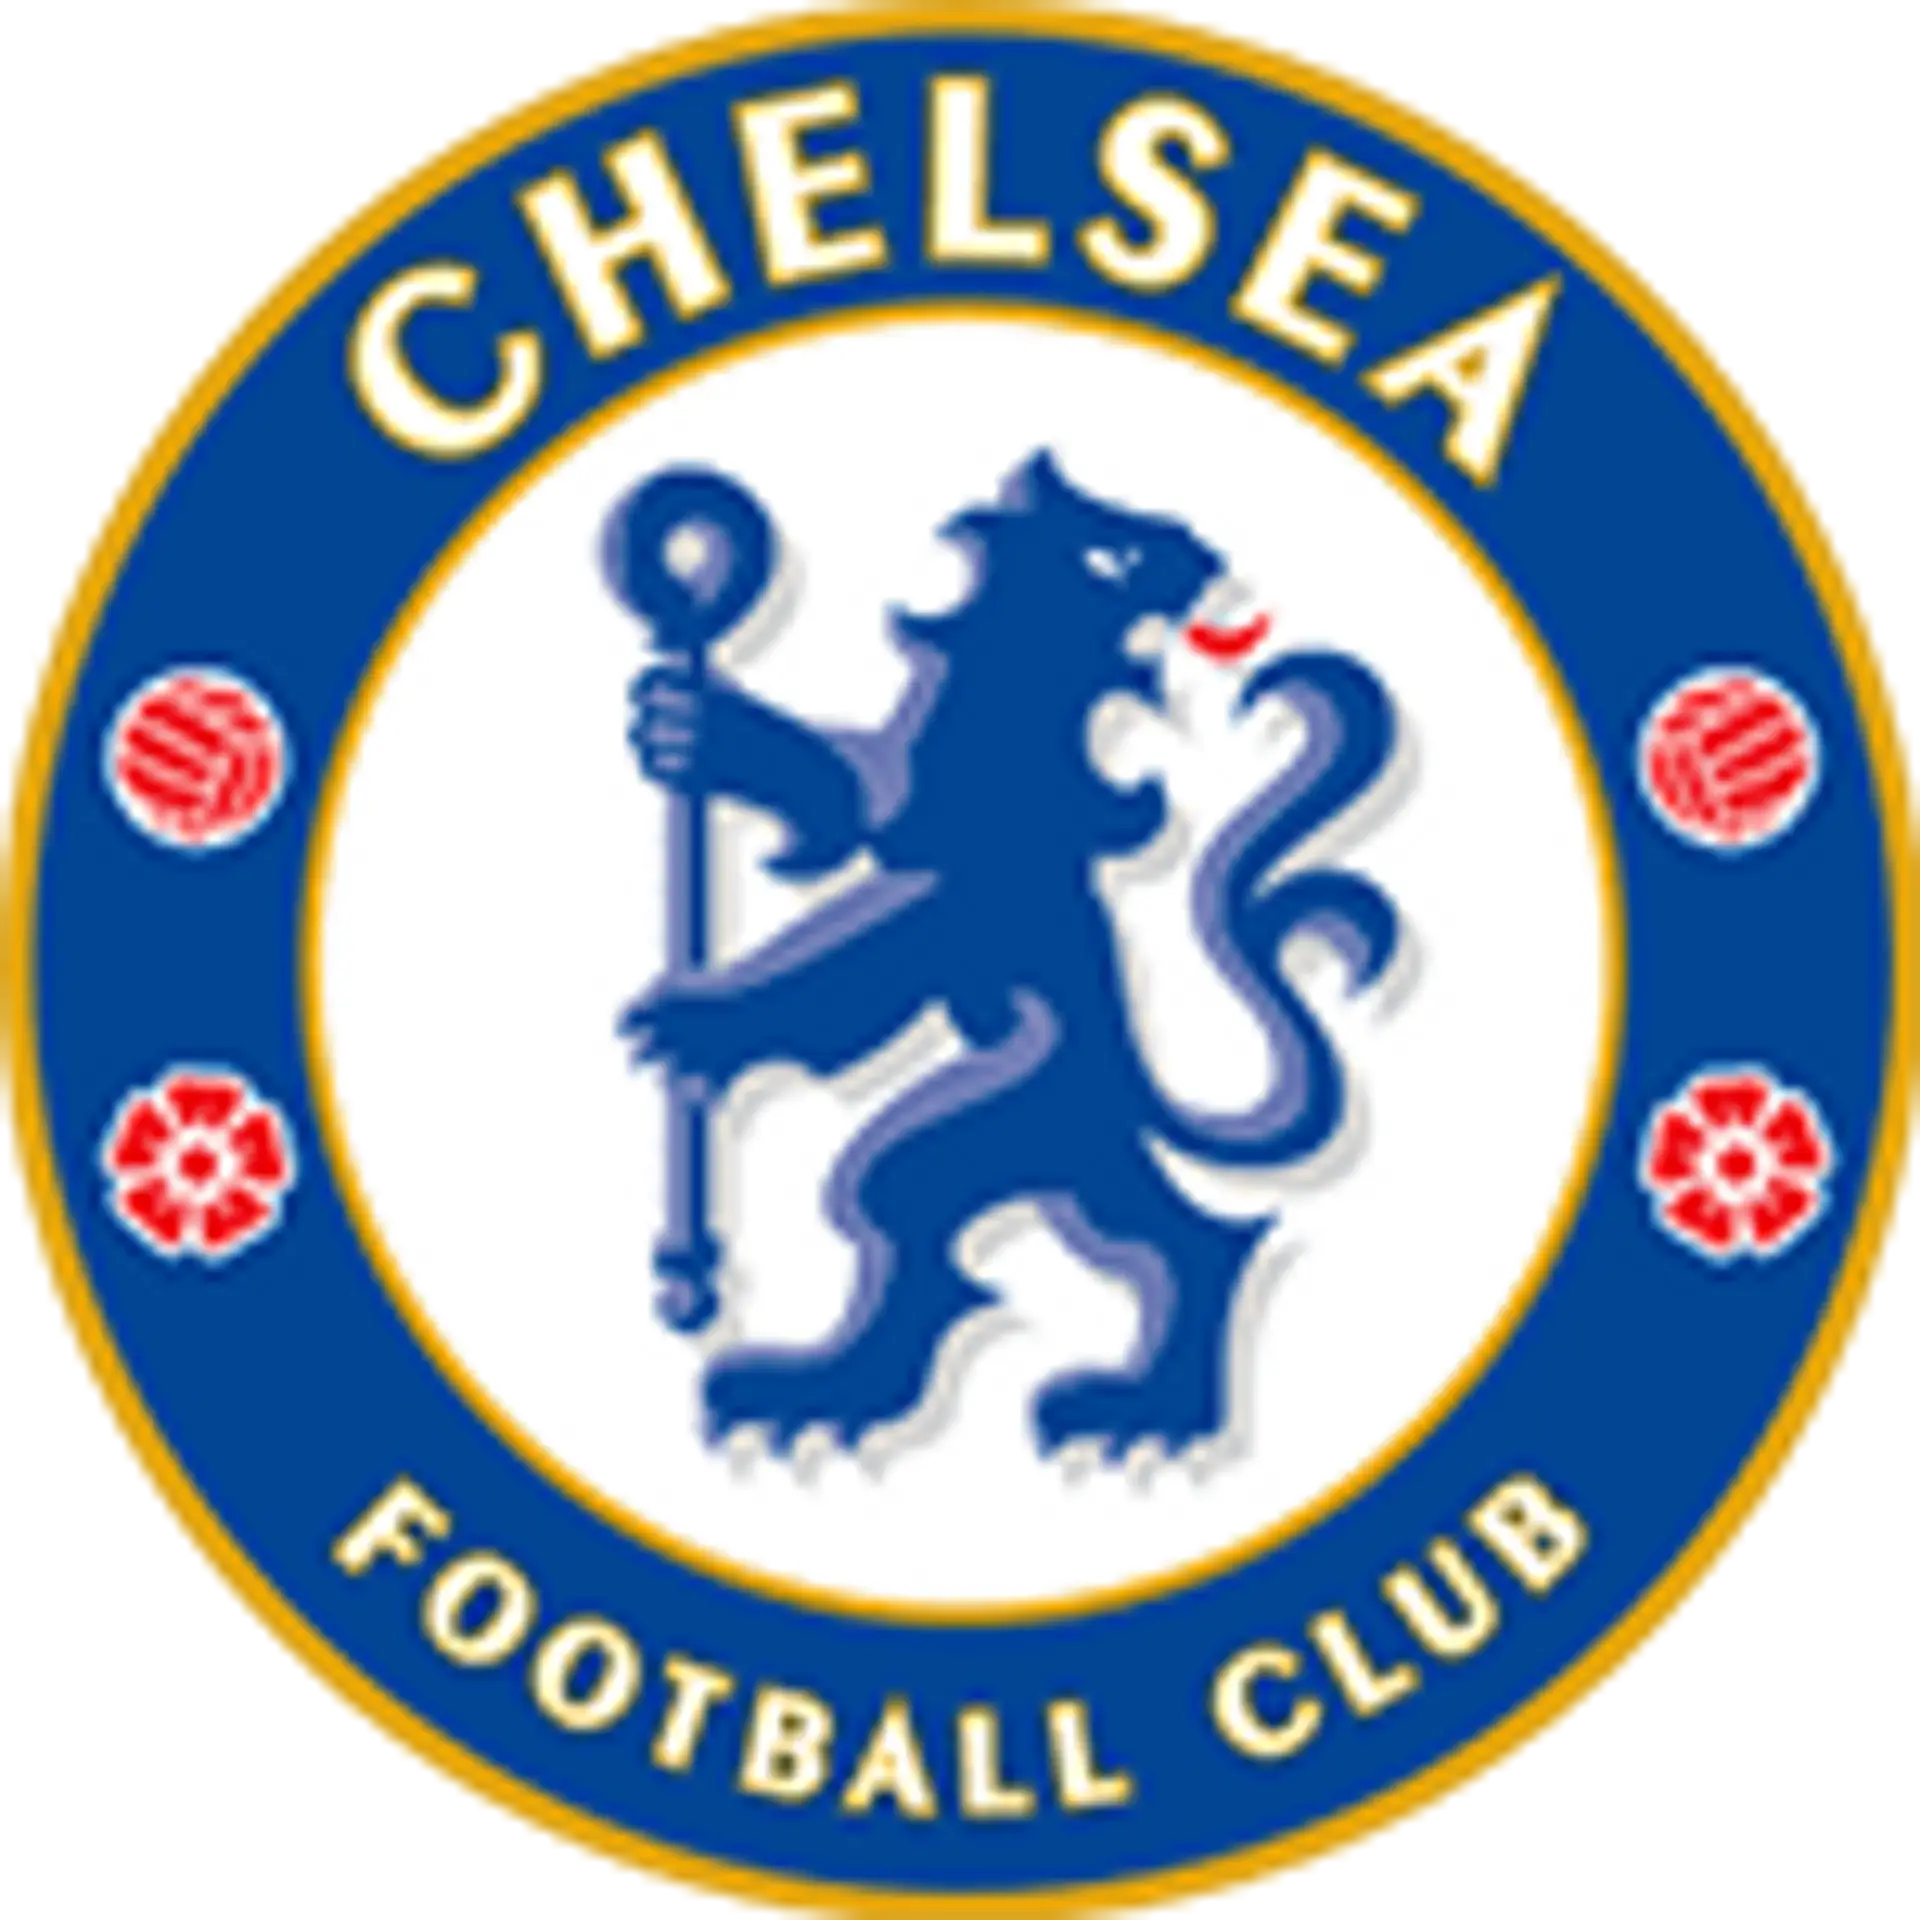 Chelsea Equipe